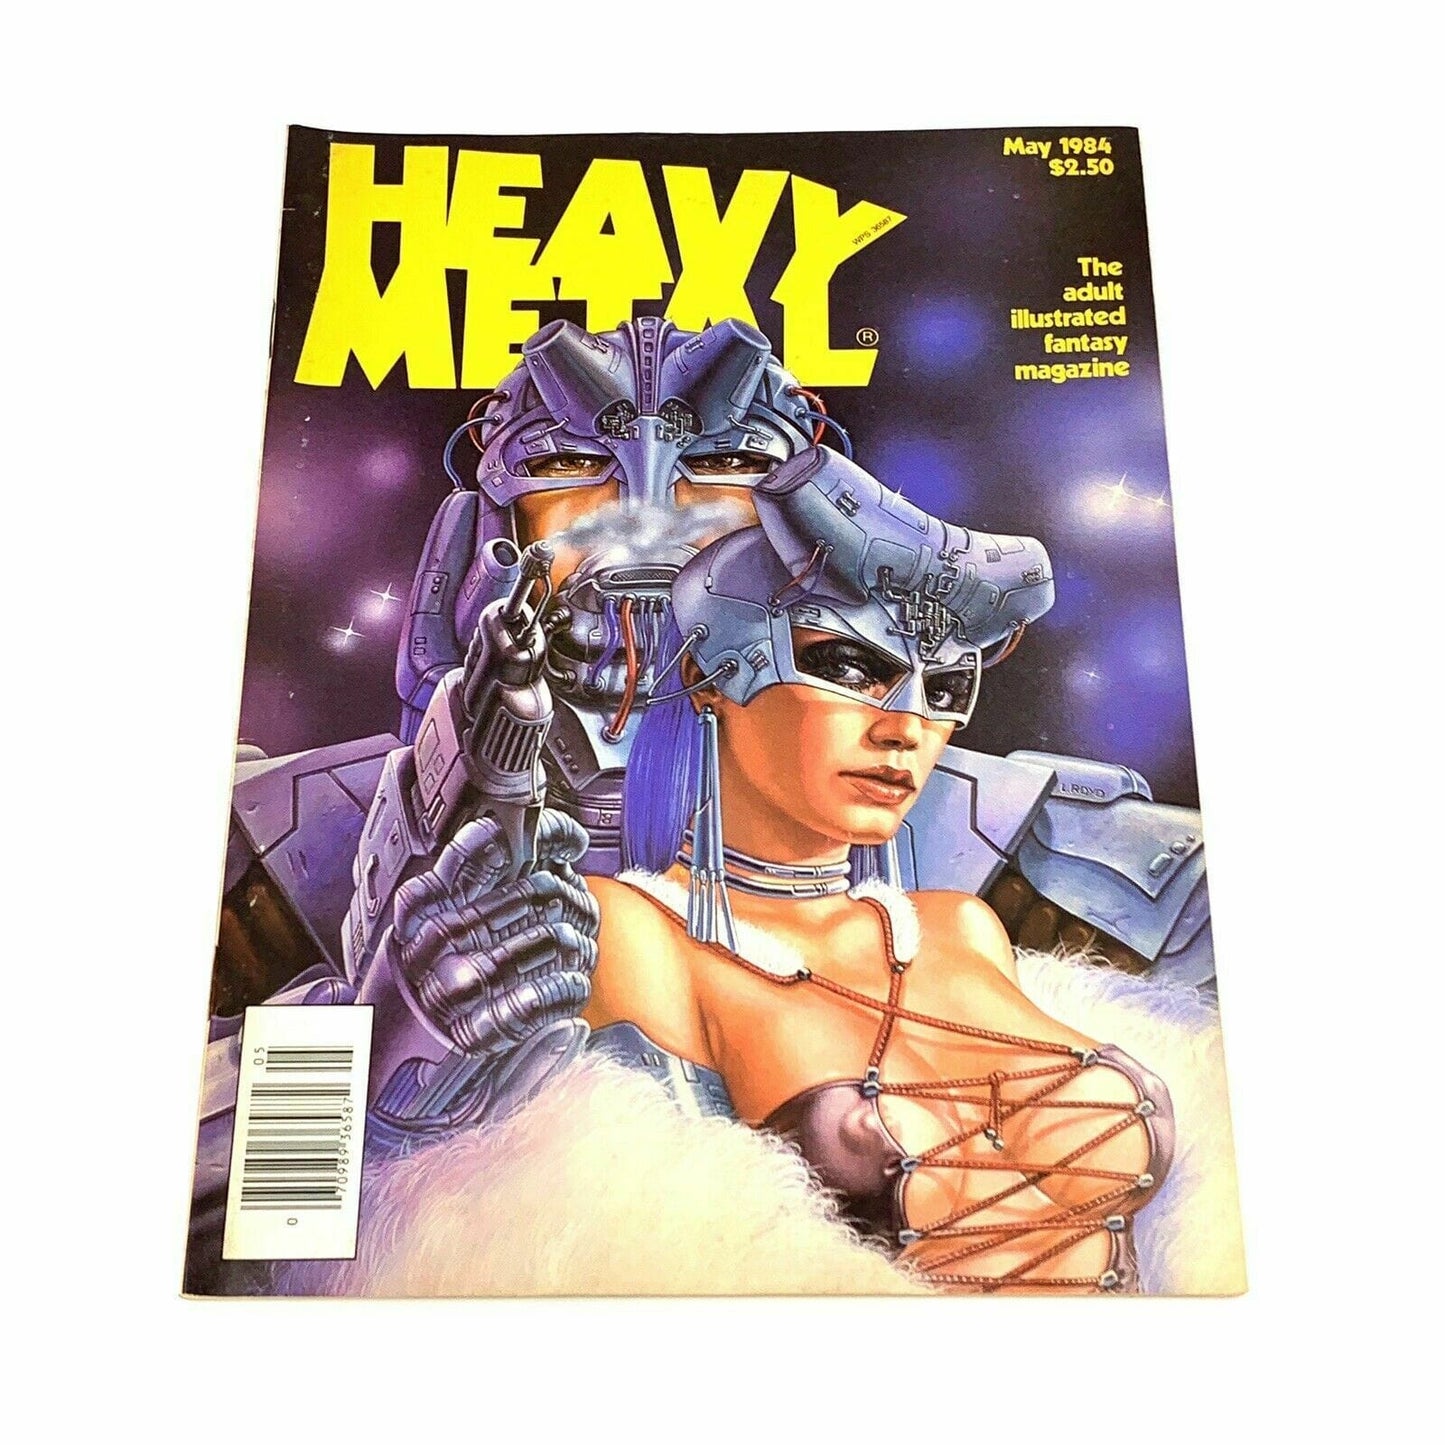 HEAVY METAL - Adult Illustrative Fantasy Magazine - May 1984 - parsimonyshoppes